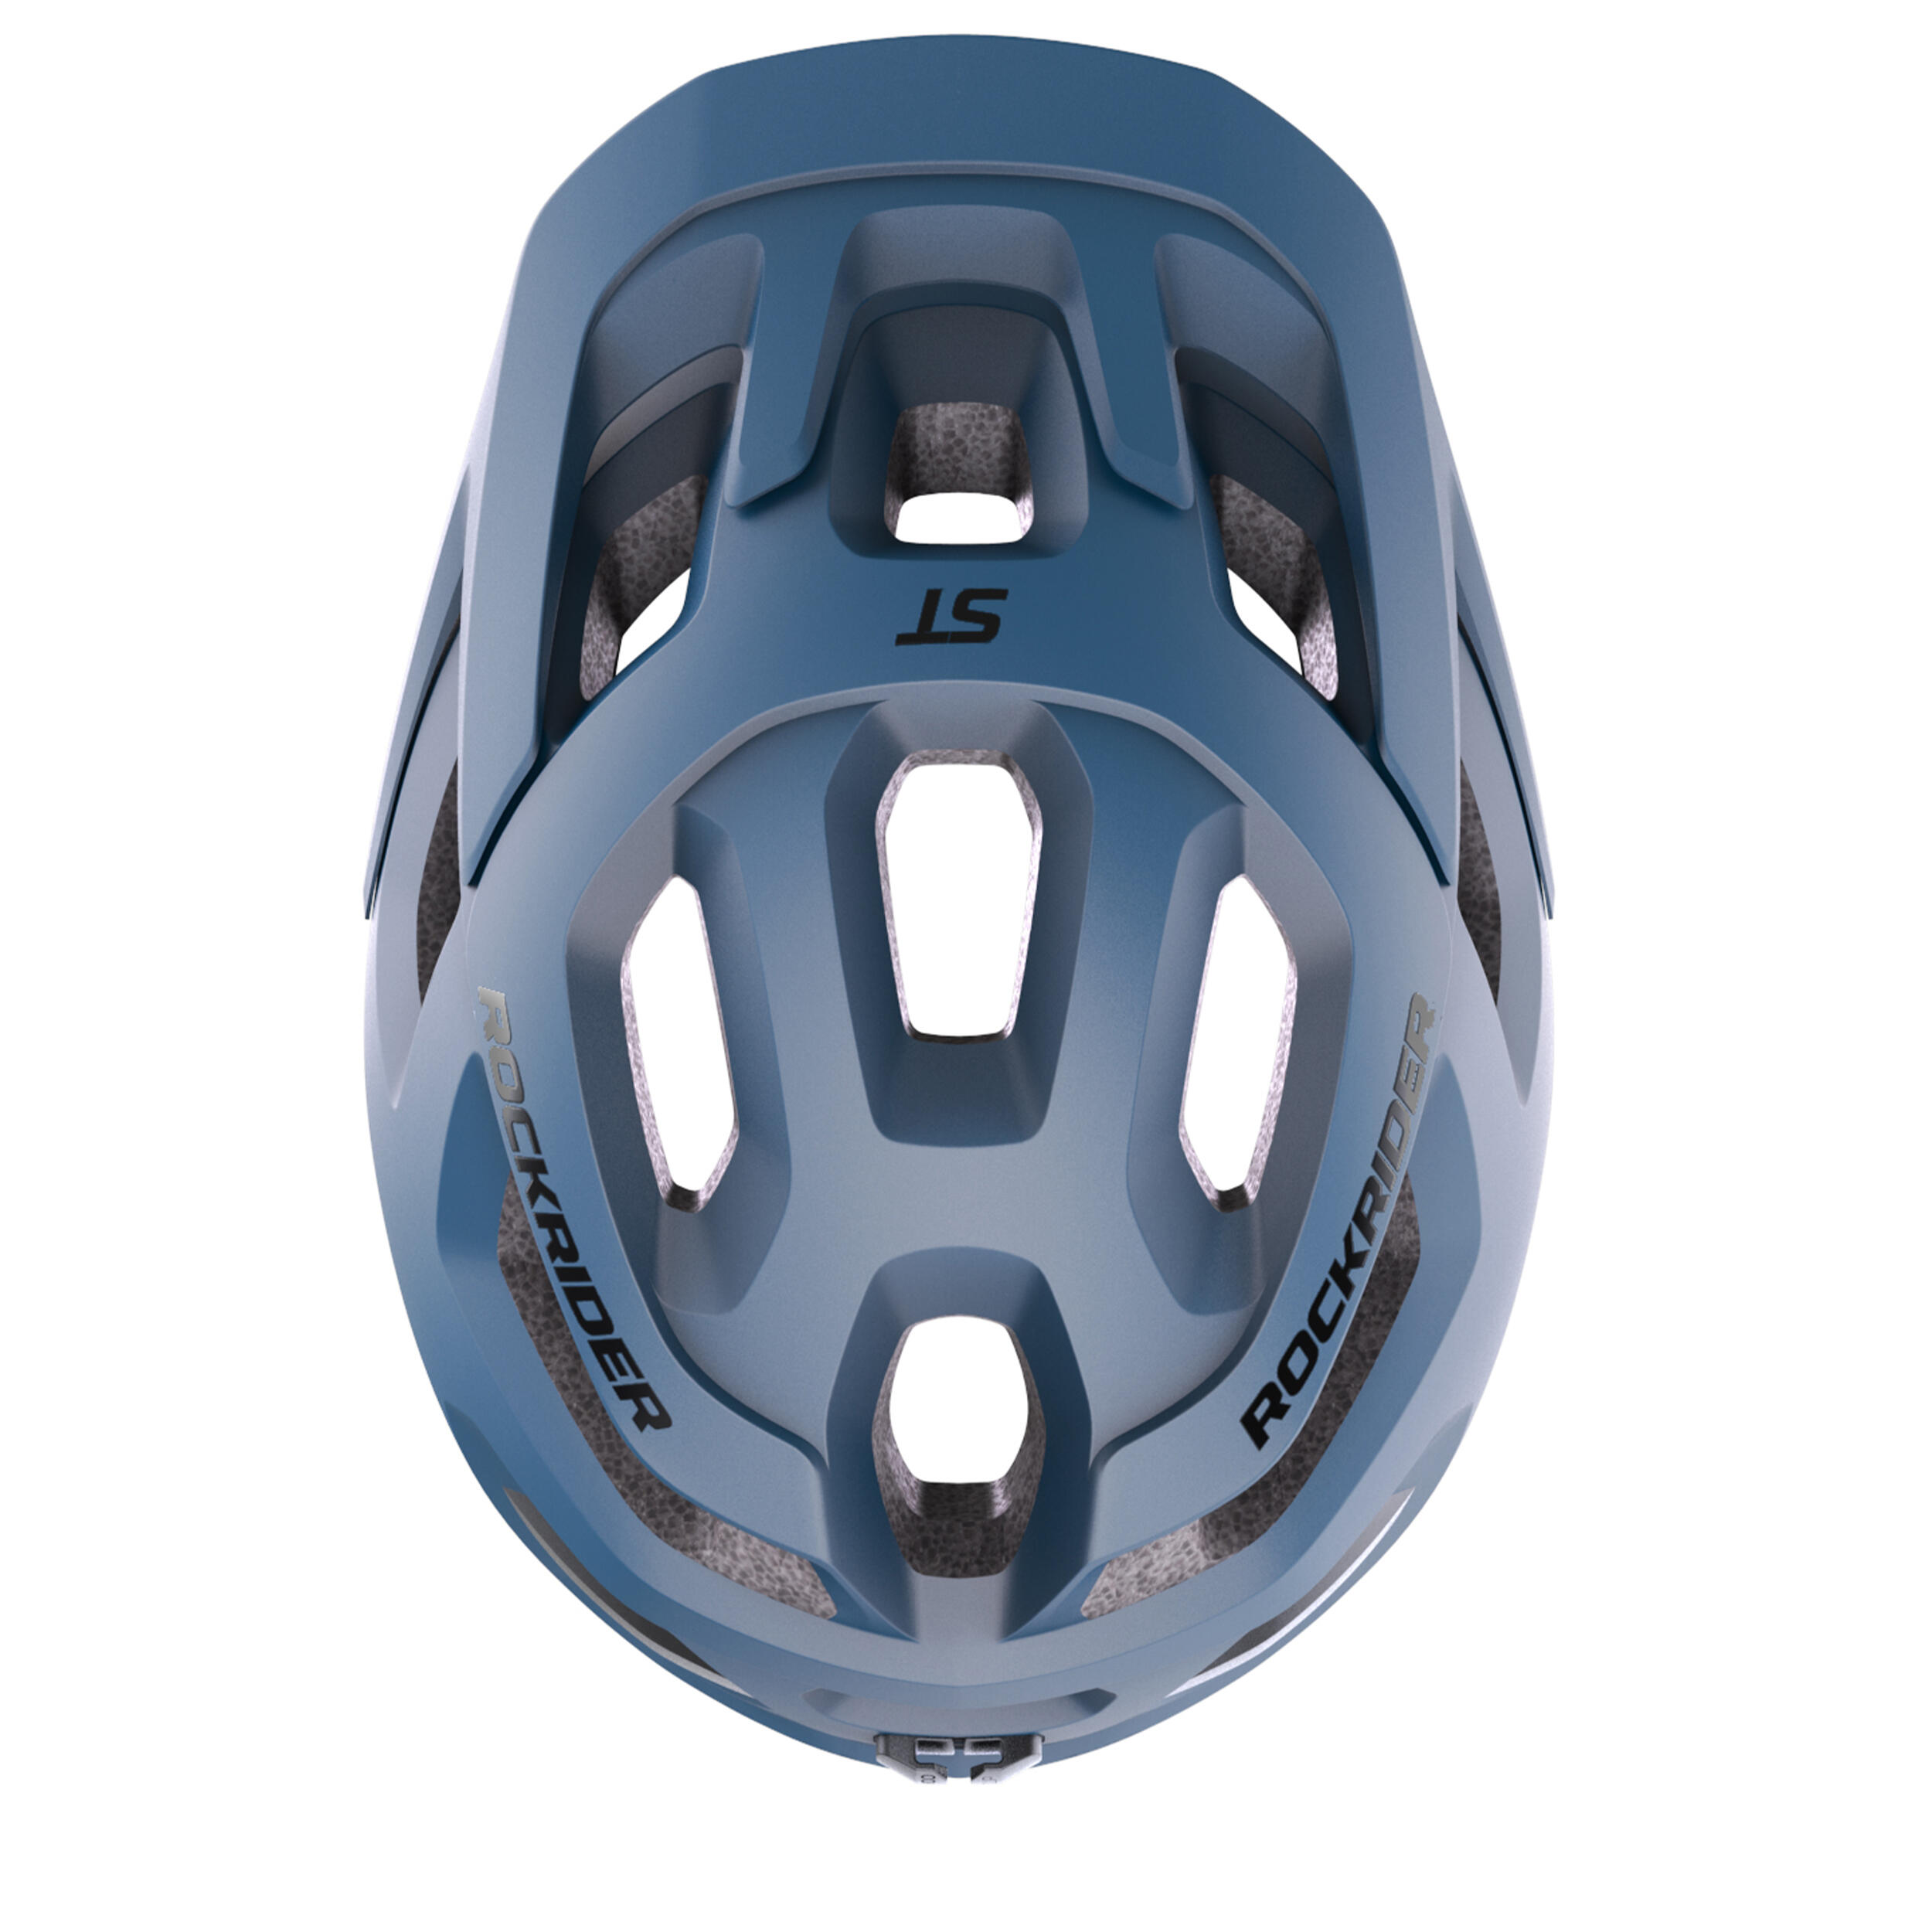 Mountain Bike Helmet - EXPL 500 - ROCKRIDER